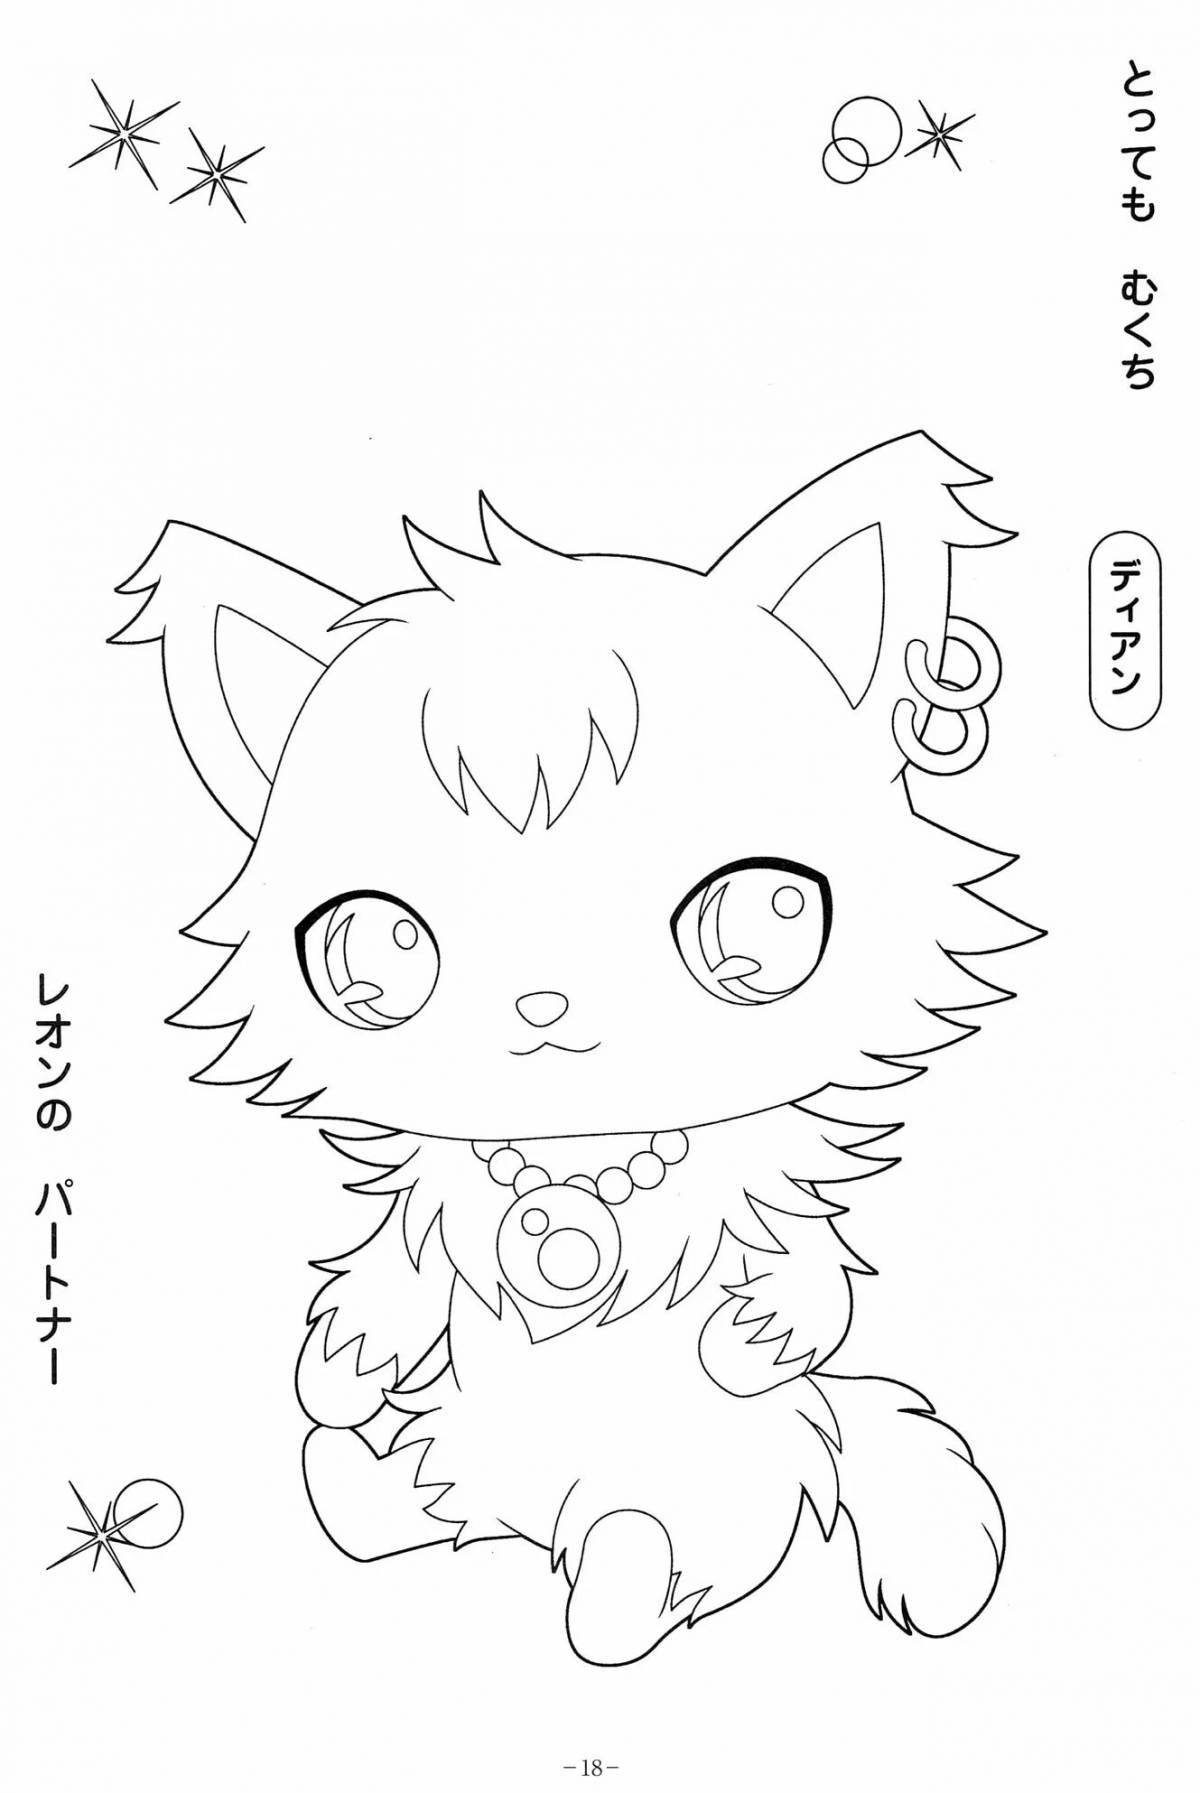 Joyful anime cat coloring book